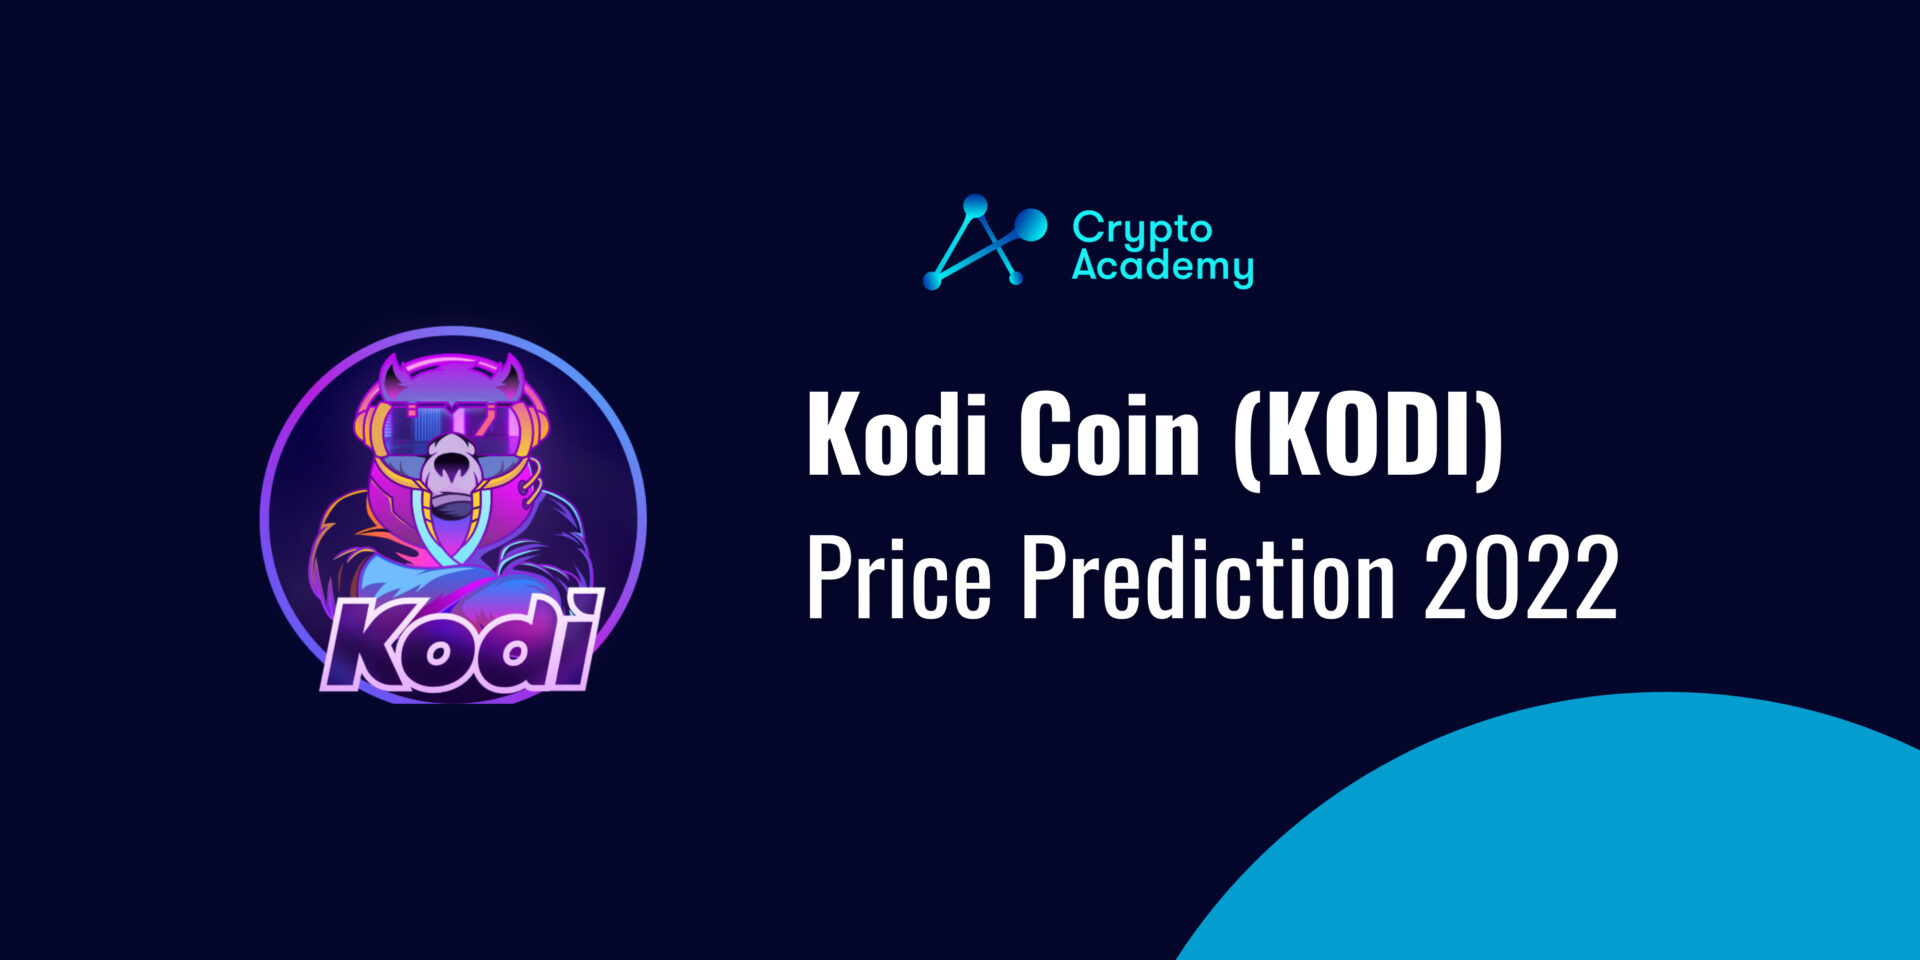 Kodi Coin Price Prediction 2022 and Beyond - Will Kodi Potentially Reach $1?